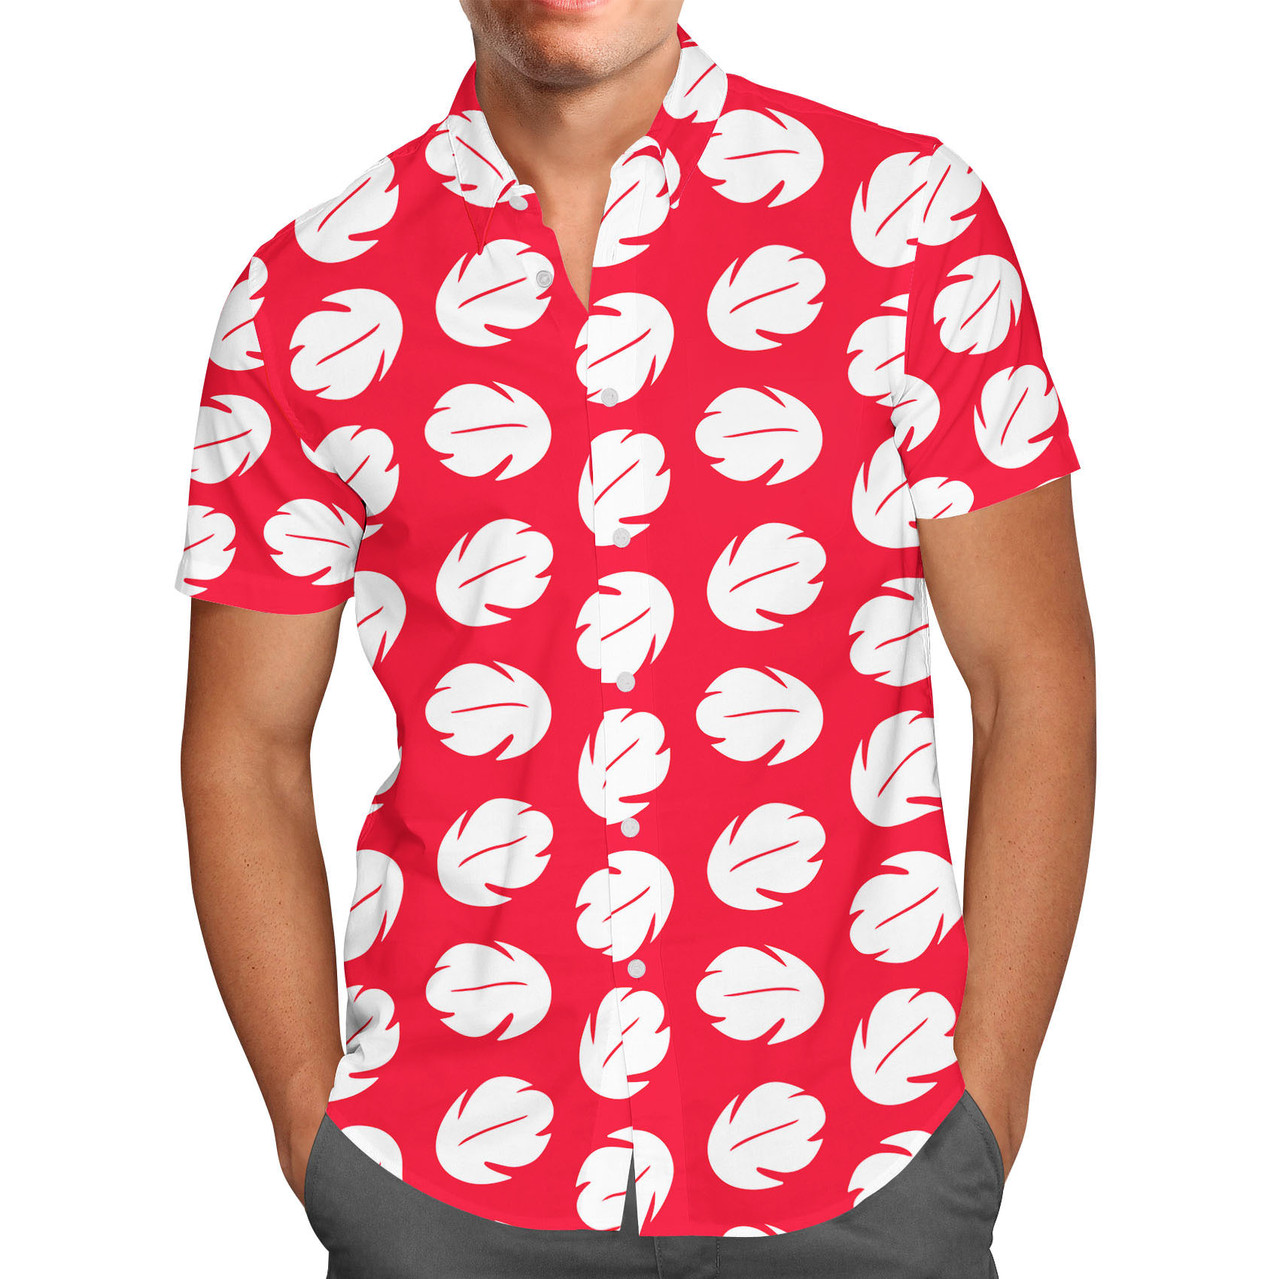  Cartoon Teddy Bears Heart Men's Hawaiian Shirt Short Sleeves  Button Down Aloha Shirts Beach Dress Shirts XXL : Clothing, Shoes & Jewelry